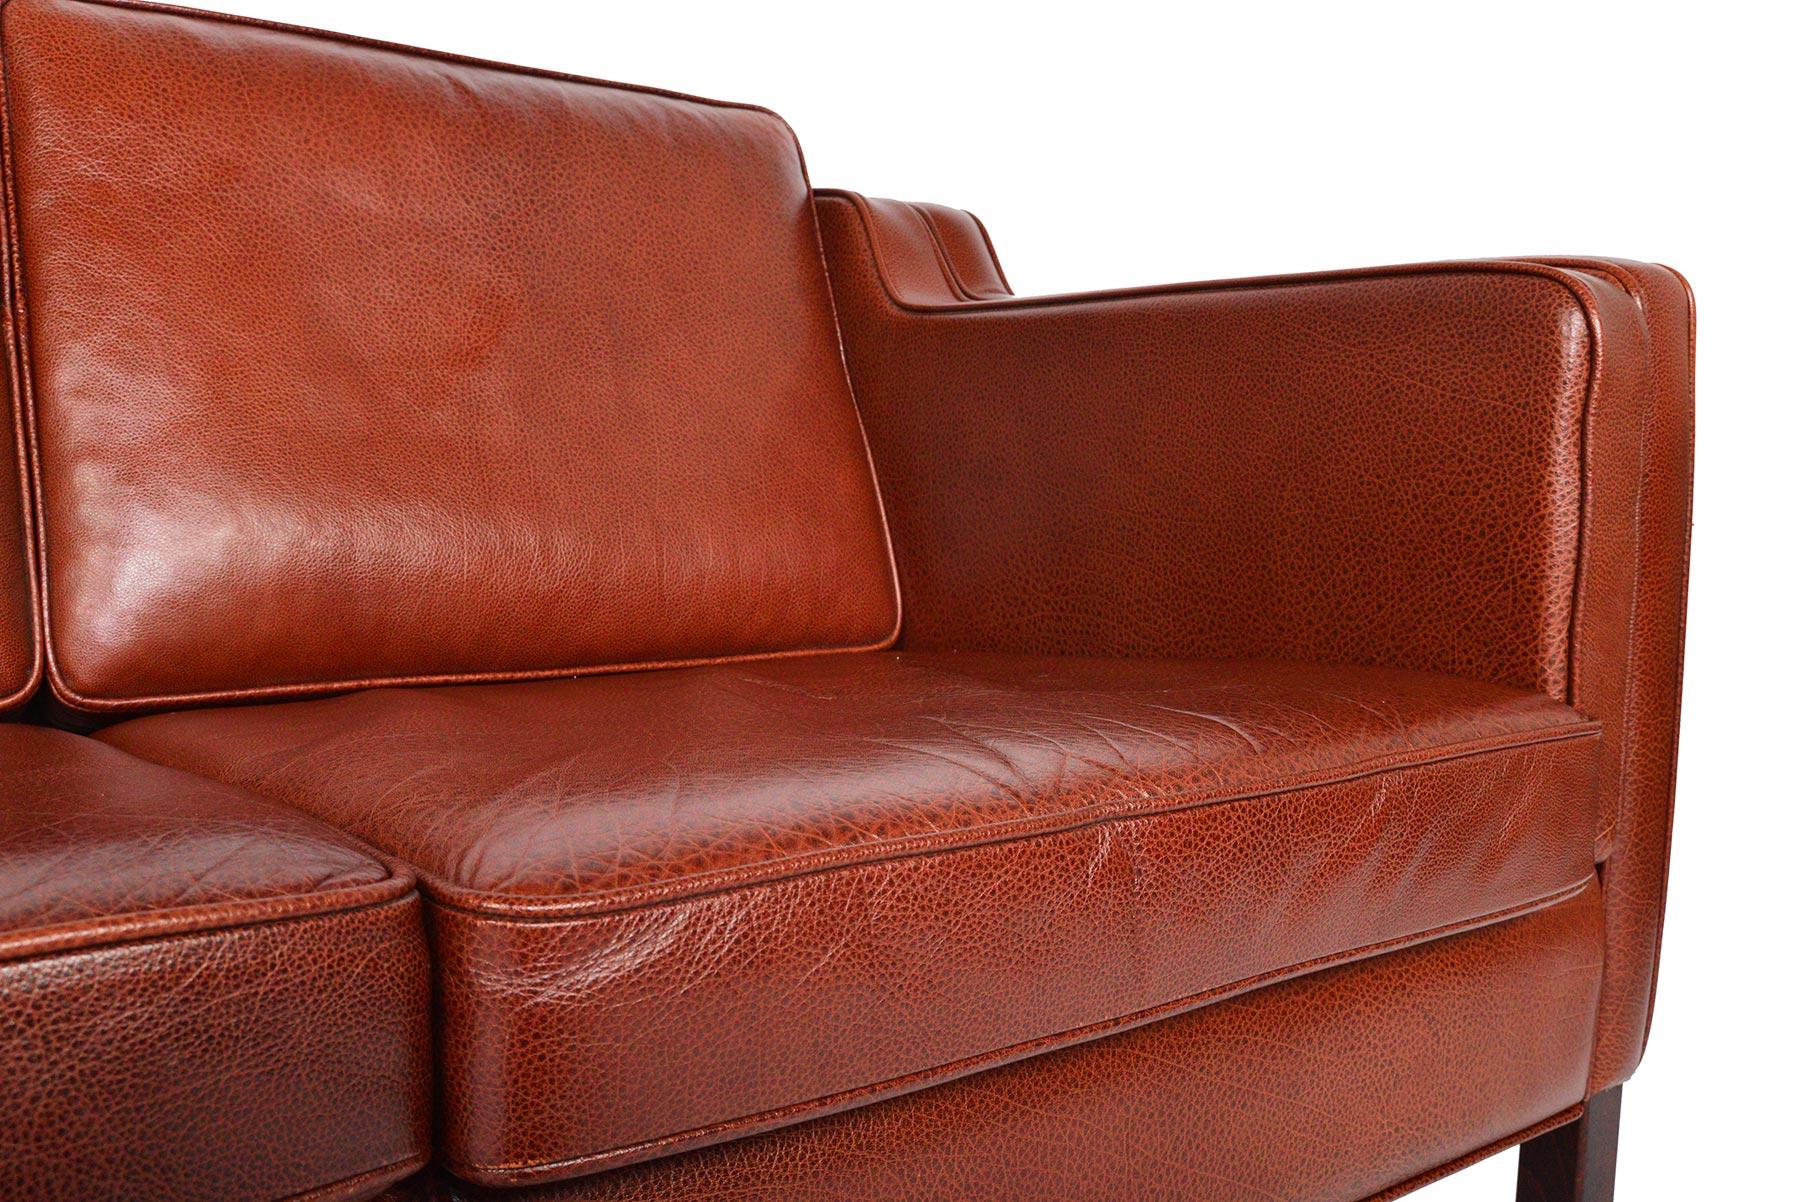 20th Century Danish Modern Three-Seat Sofa in Rust Red Leather